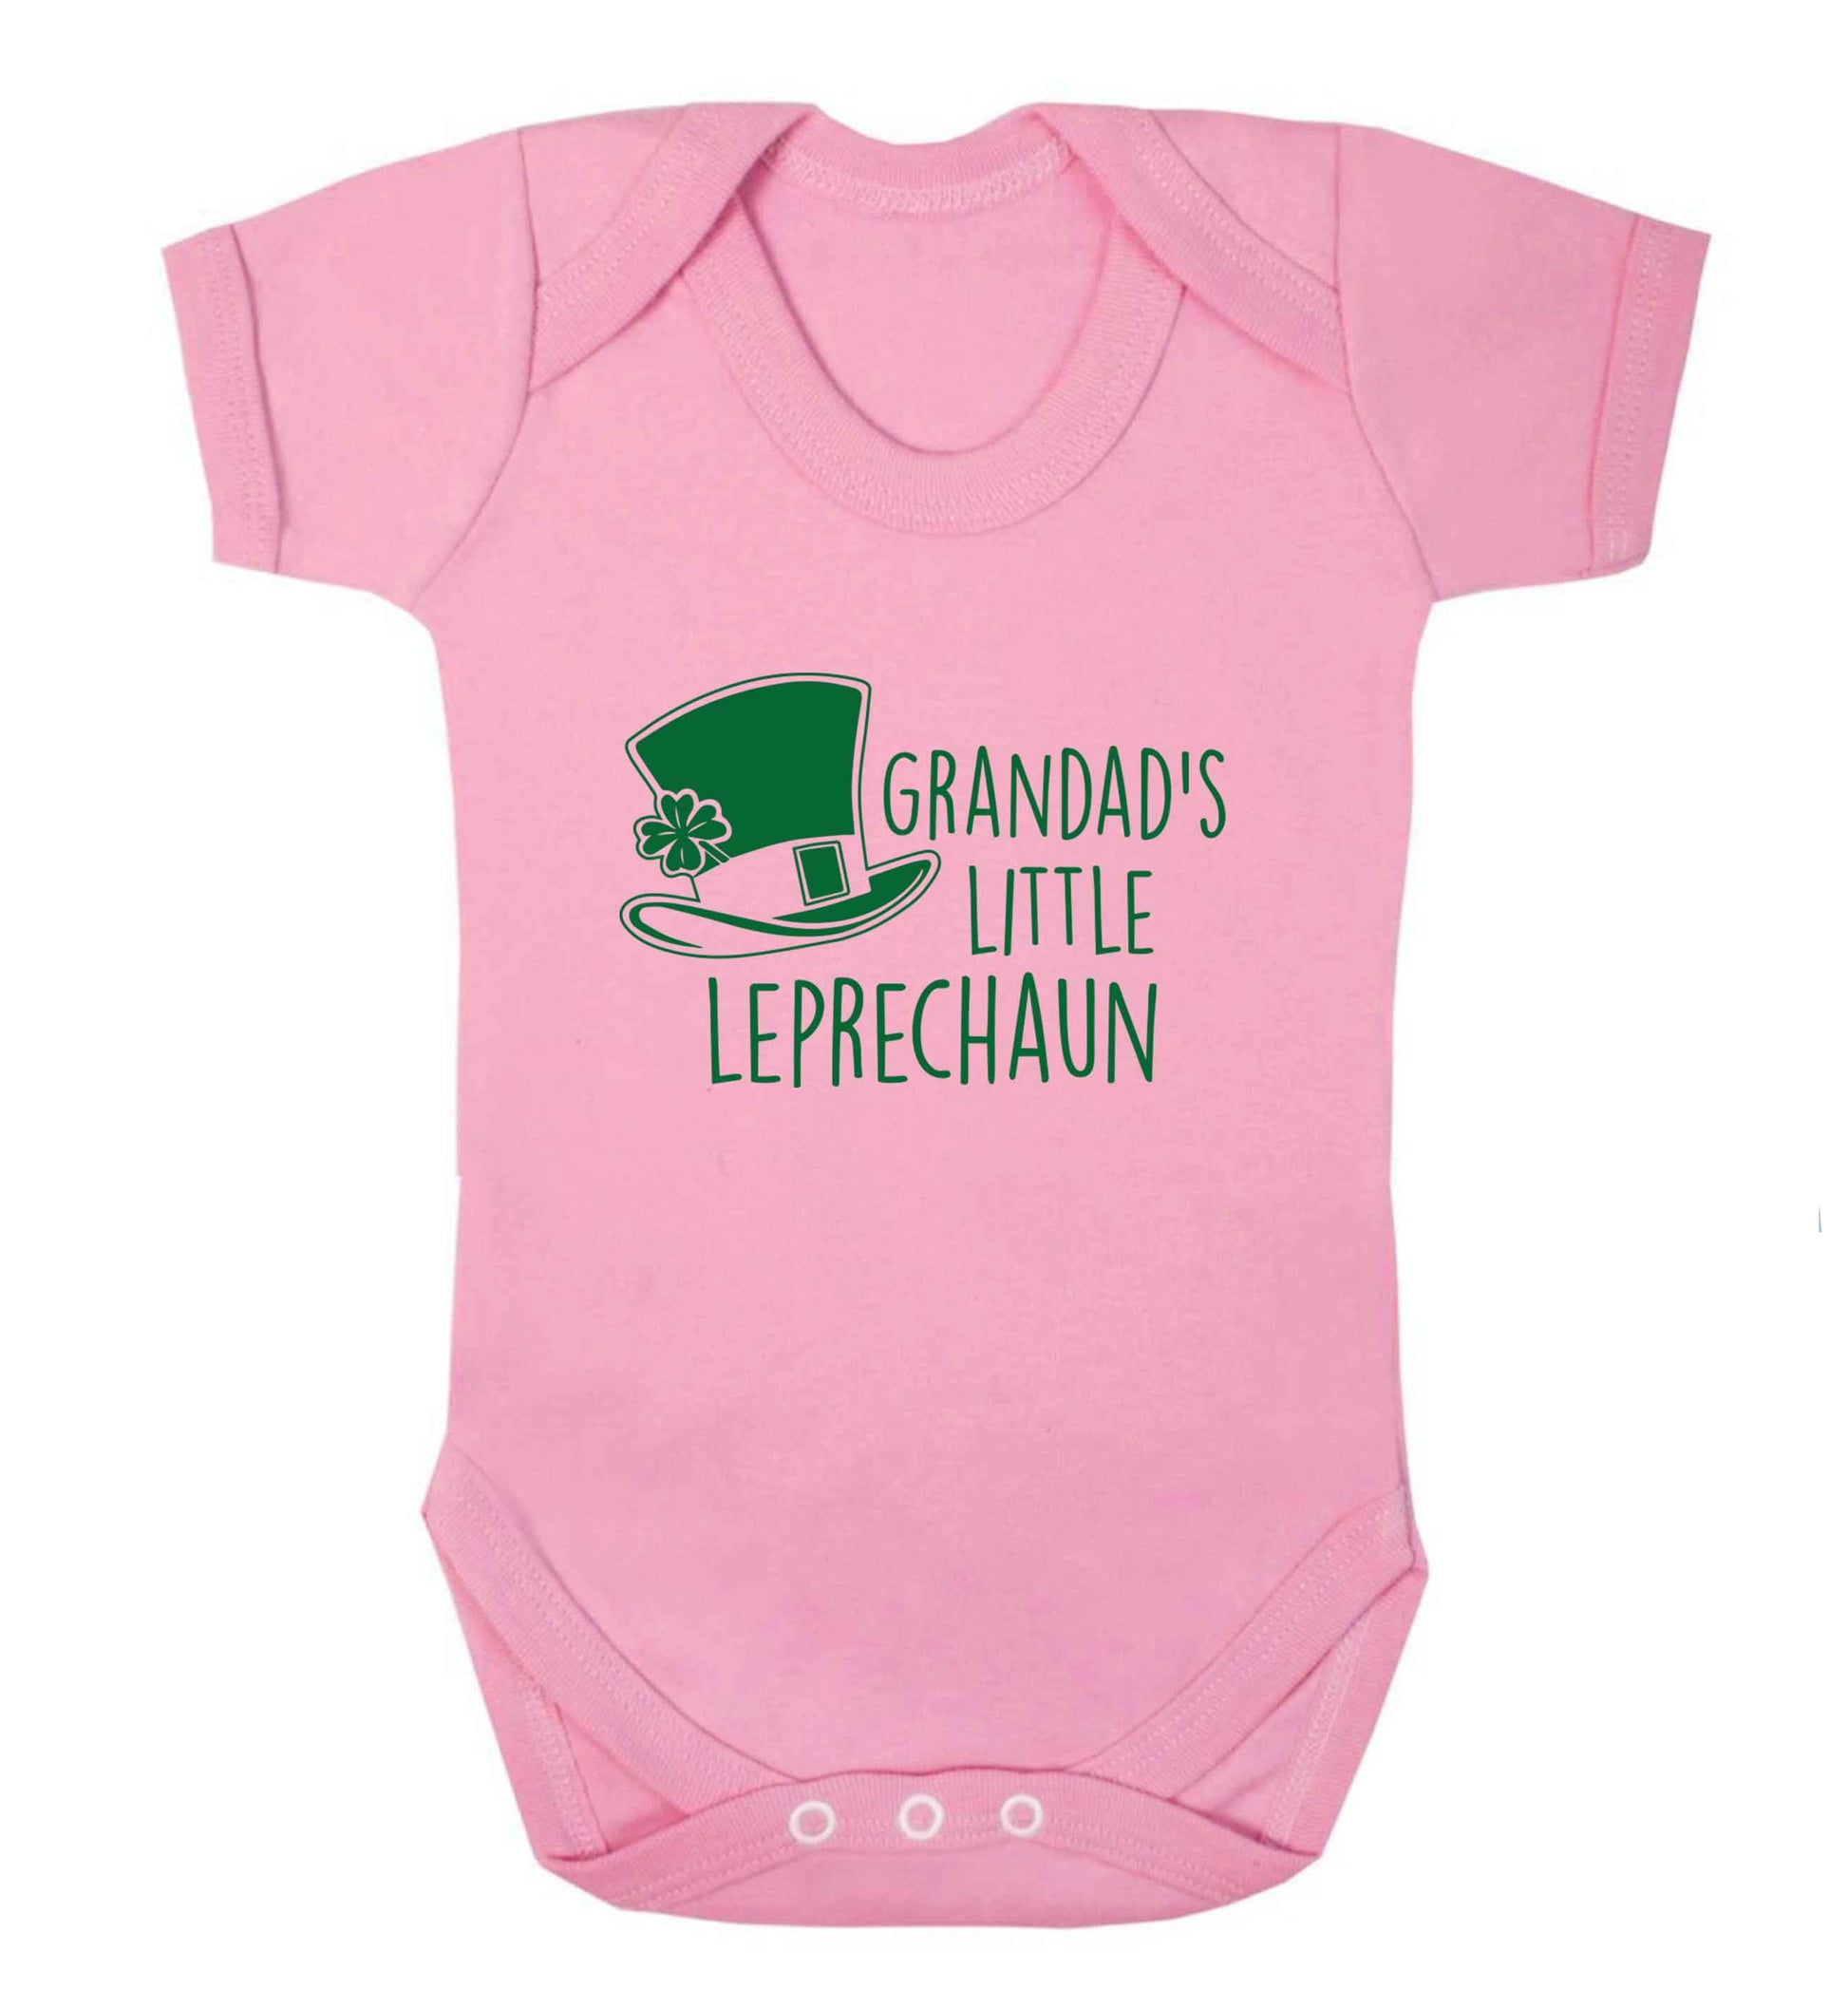 Grandad's little leprechaun baby vest pale pink 18-24 months